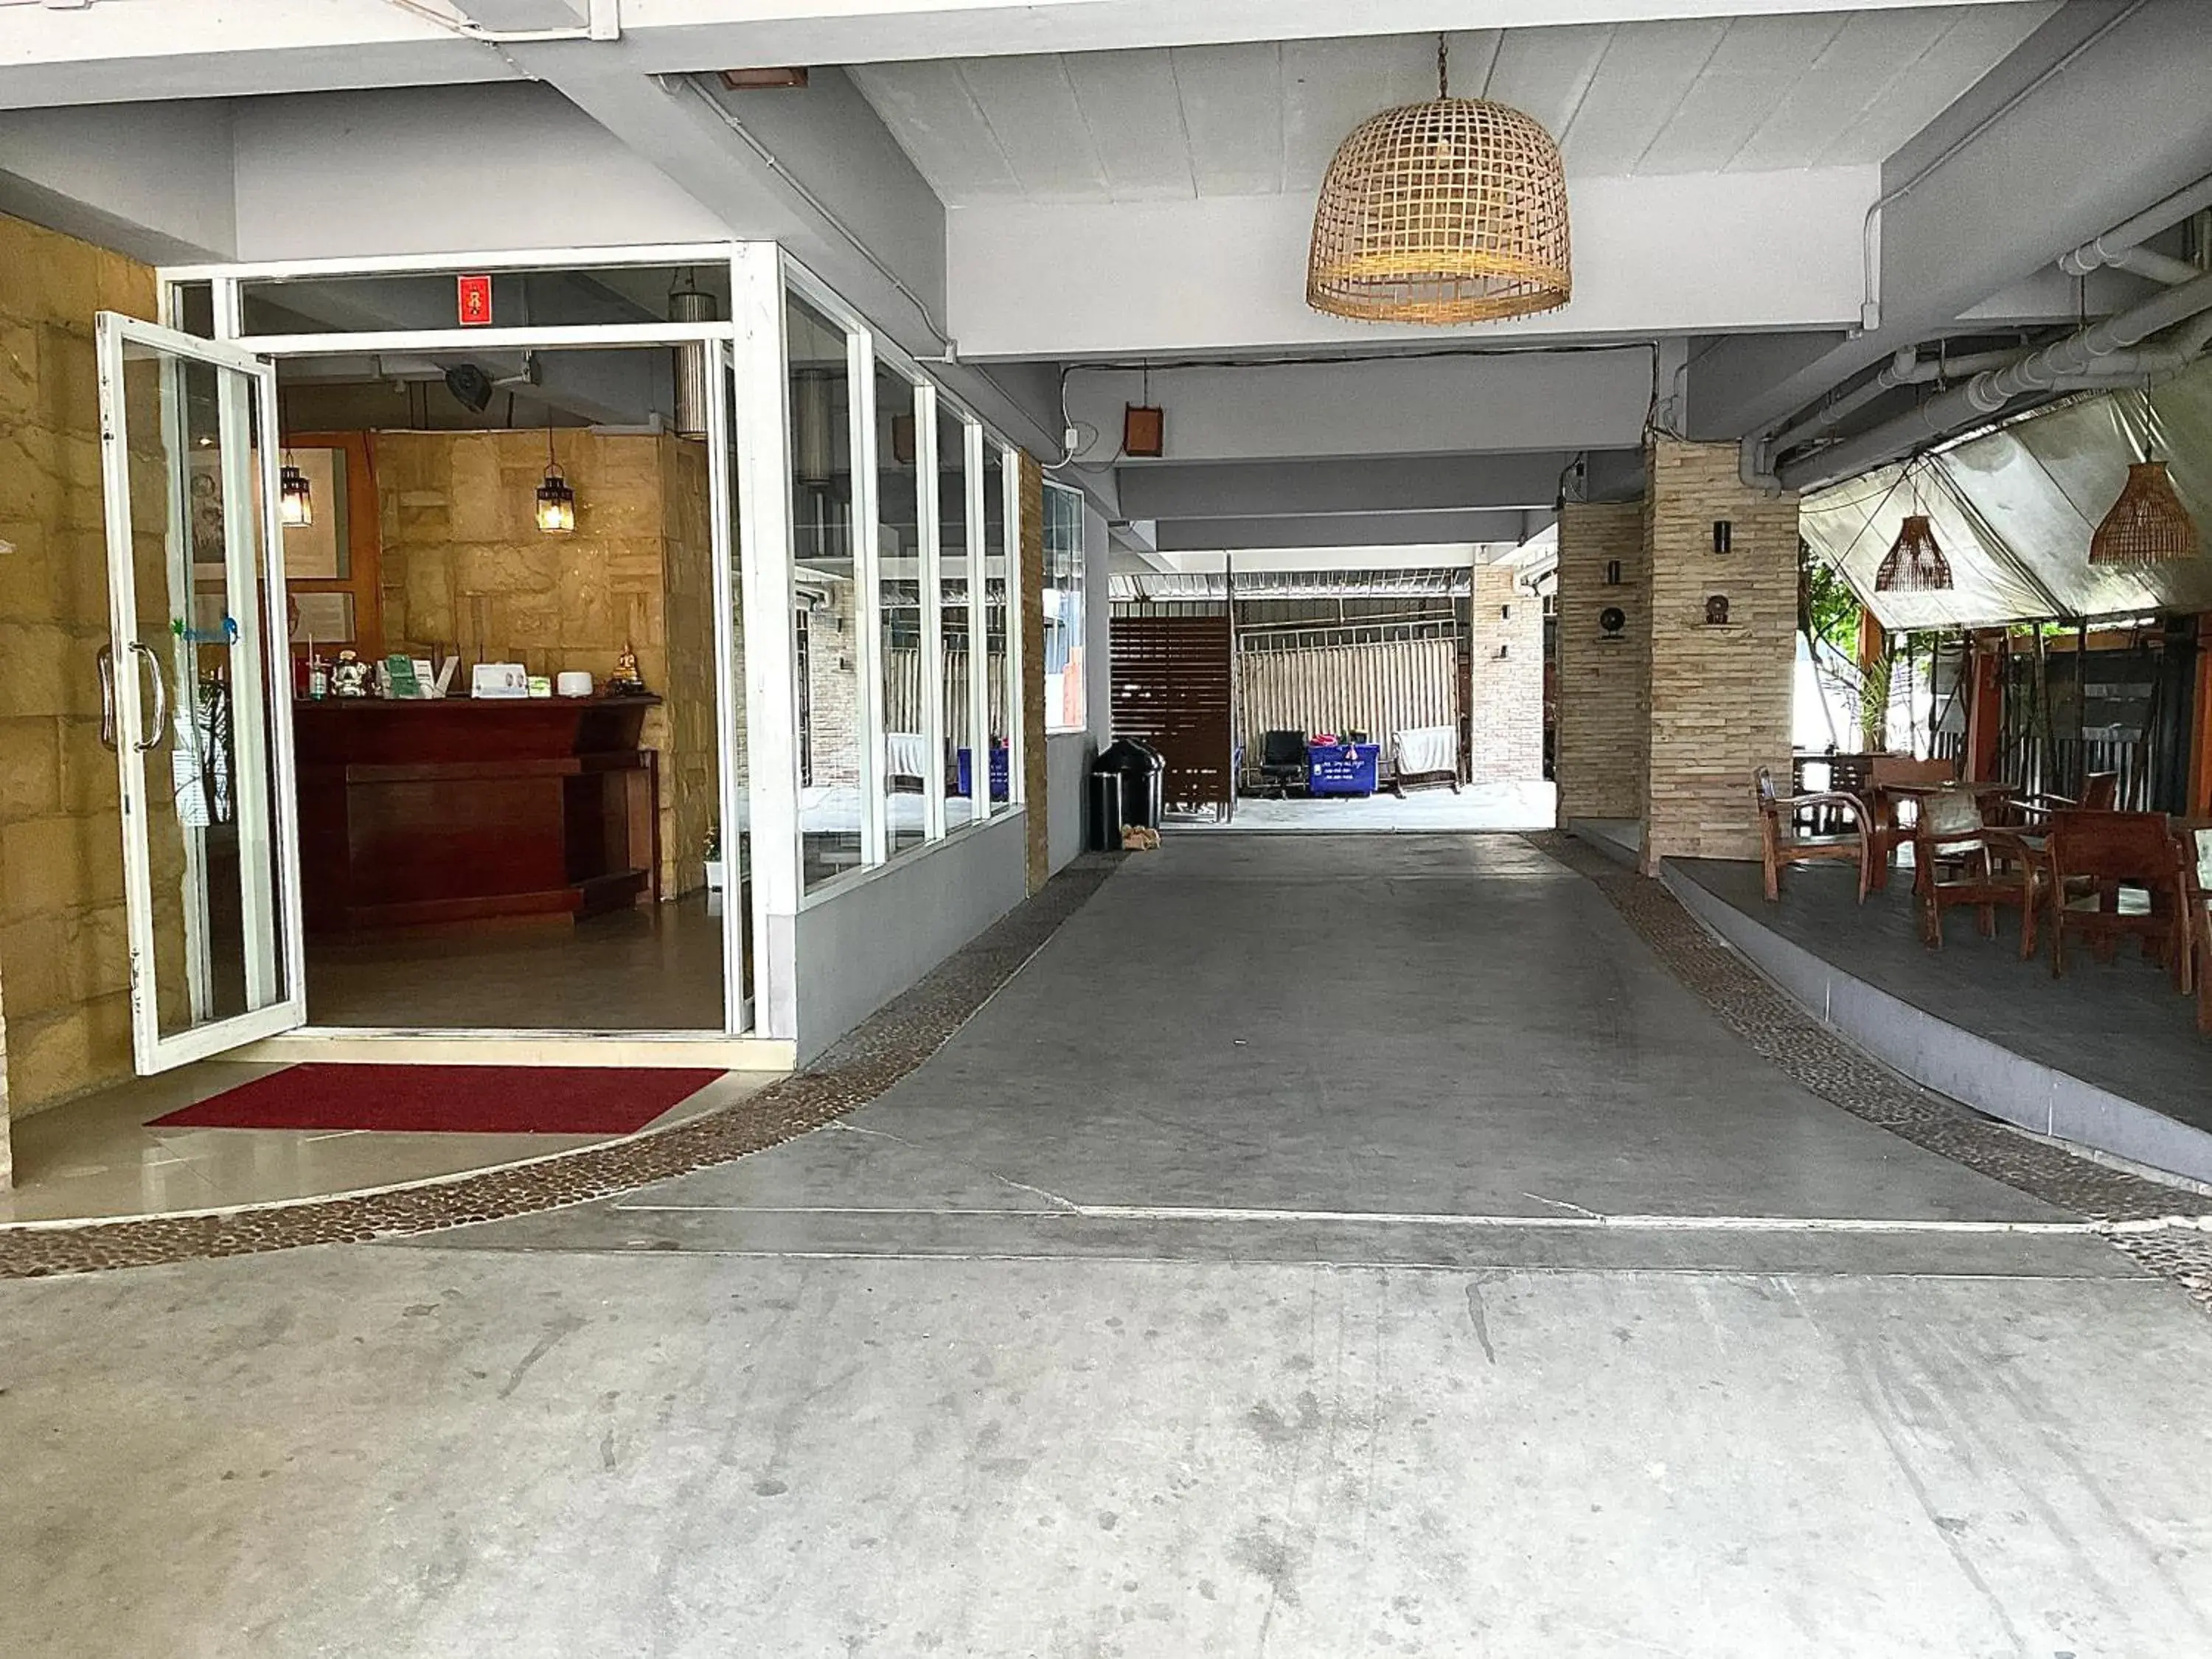 Facade/entrance in Plai And Herbs Suvarnabhumi Airport